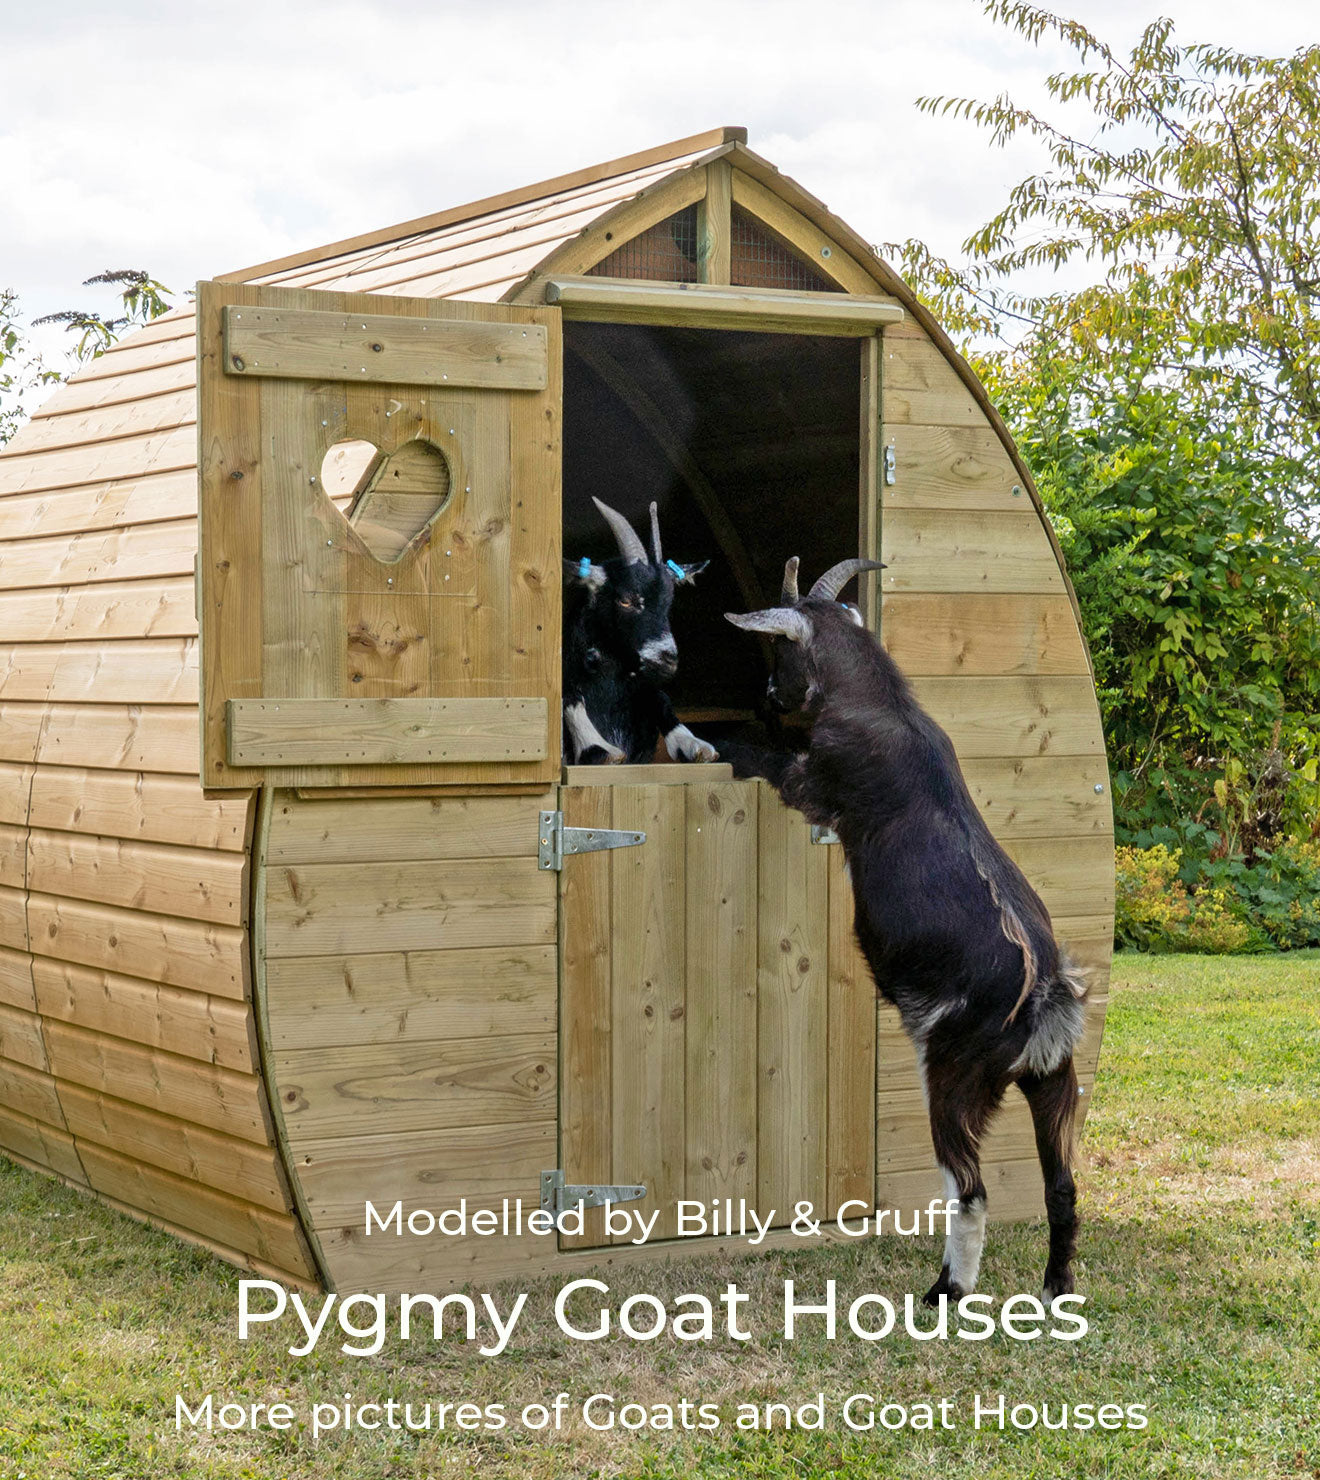 Pygmy Goat Houses Flyte so Fancy